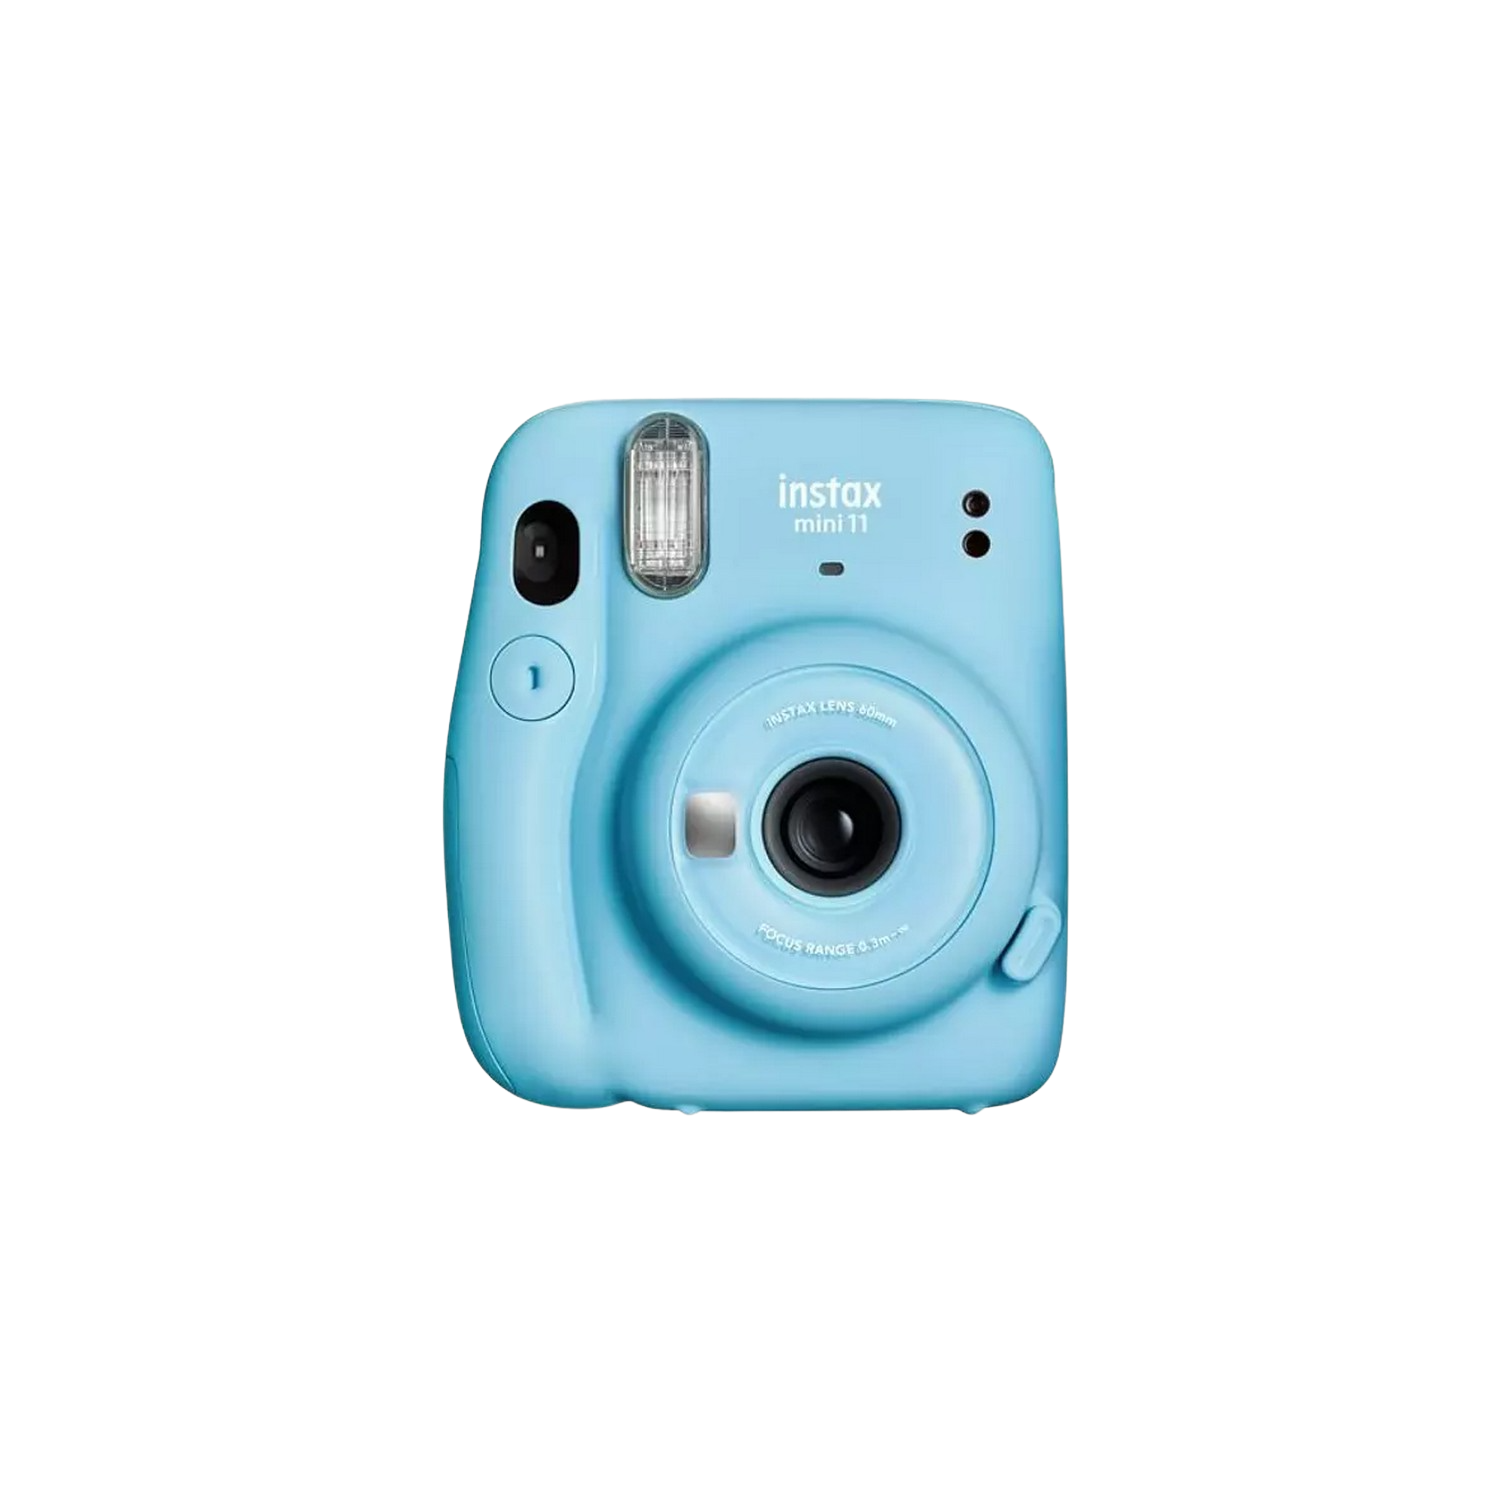 Instax 16654956 Mini 11 sky blue compacto fujifilm 62 x 46 mm flash azul modo selfie celeste cielo con de alto rendimiento 121250 2 lr6